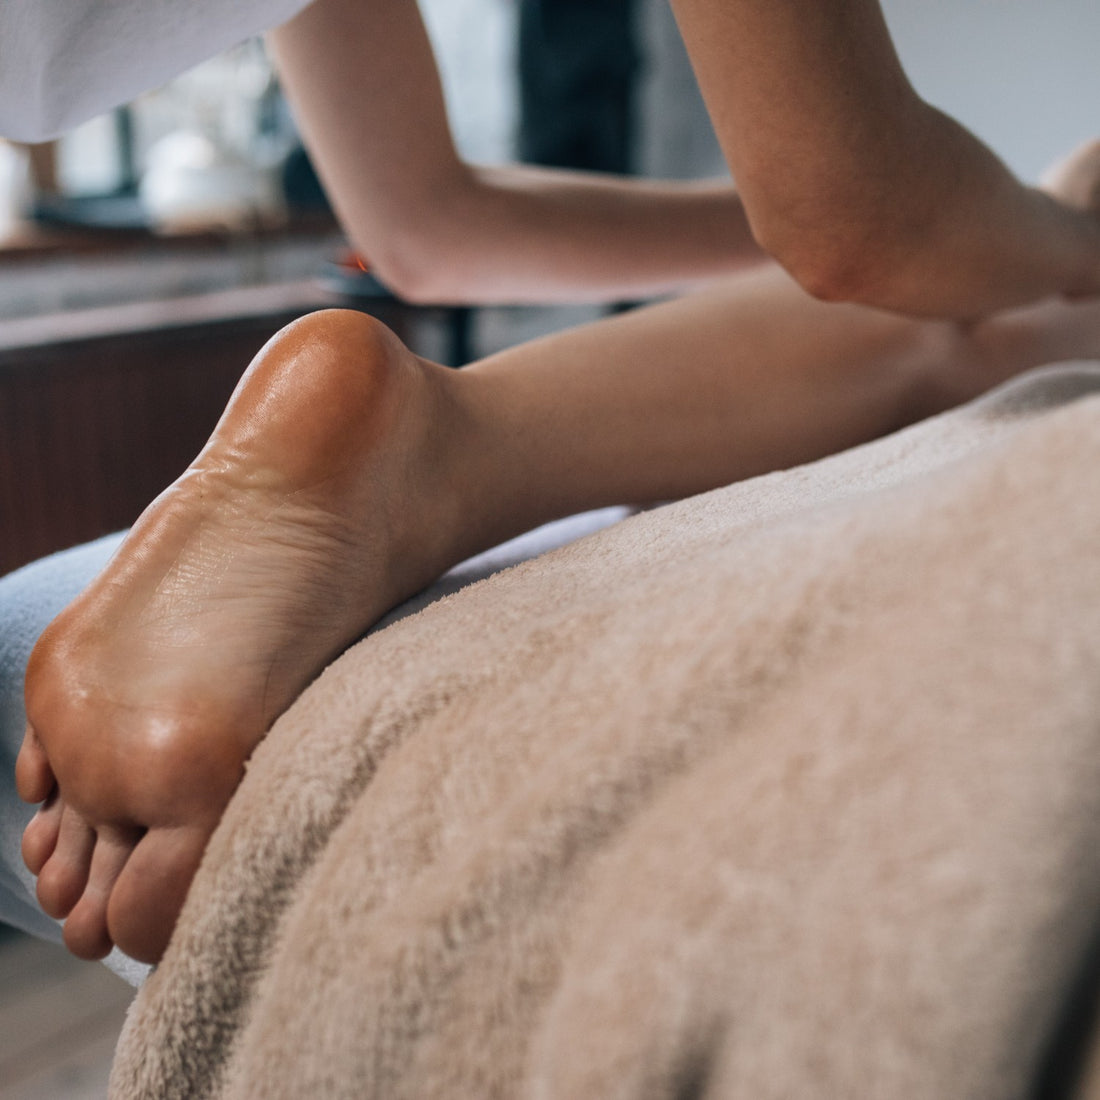 will massaging legs help circulation